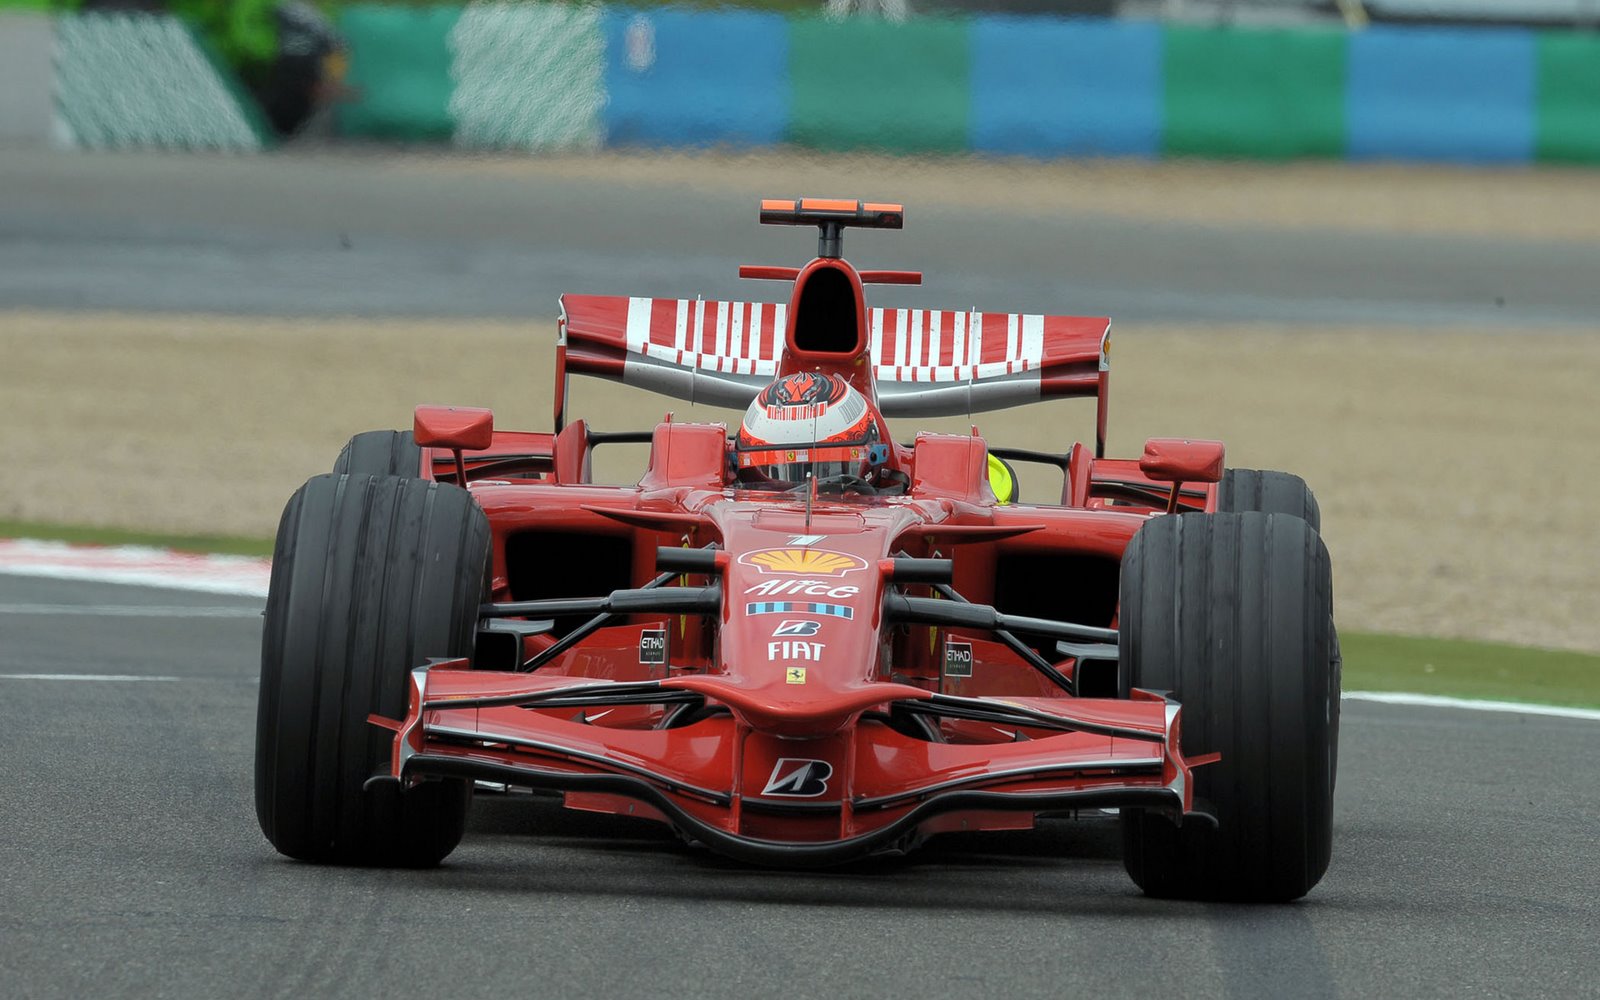 [Kimi+Räikkönen+Ferrari+Friday+Free+Practise+France+Magny+Cours+F1+2008+39.jpg]